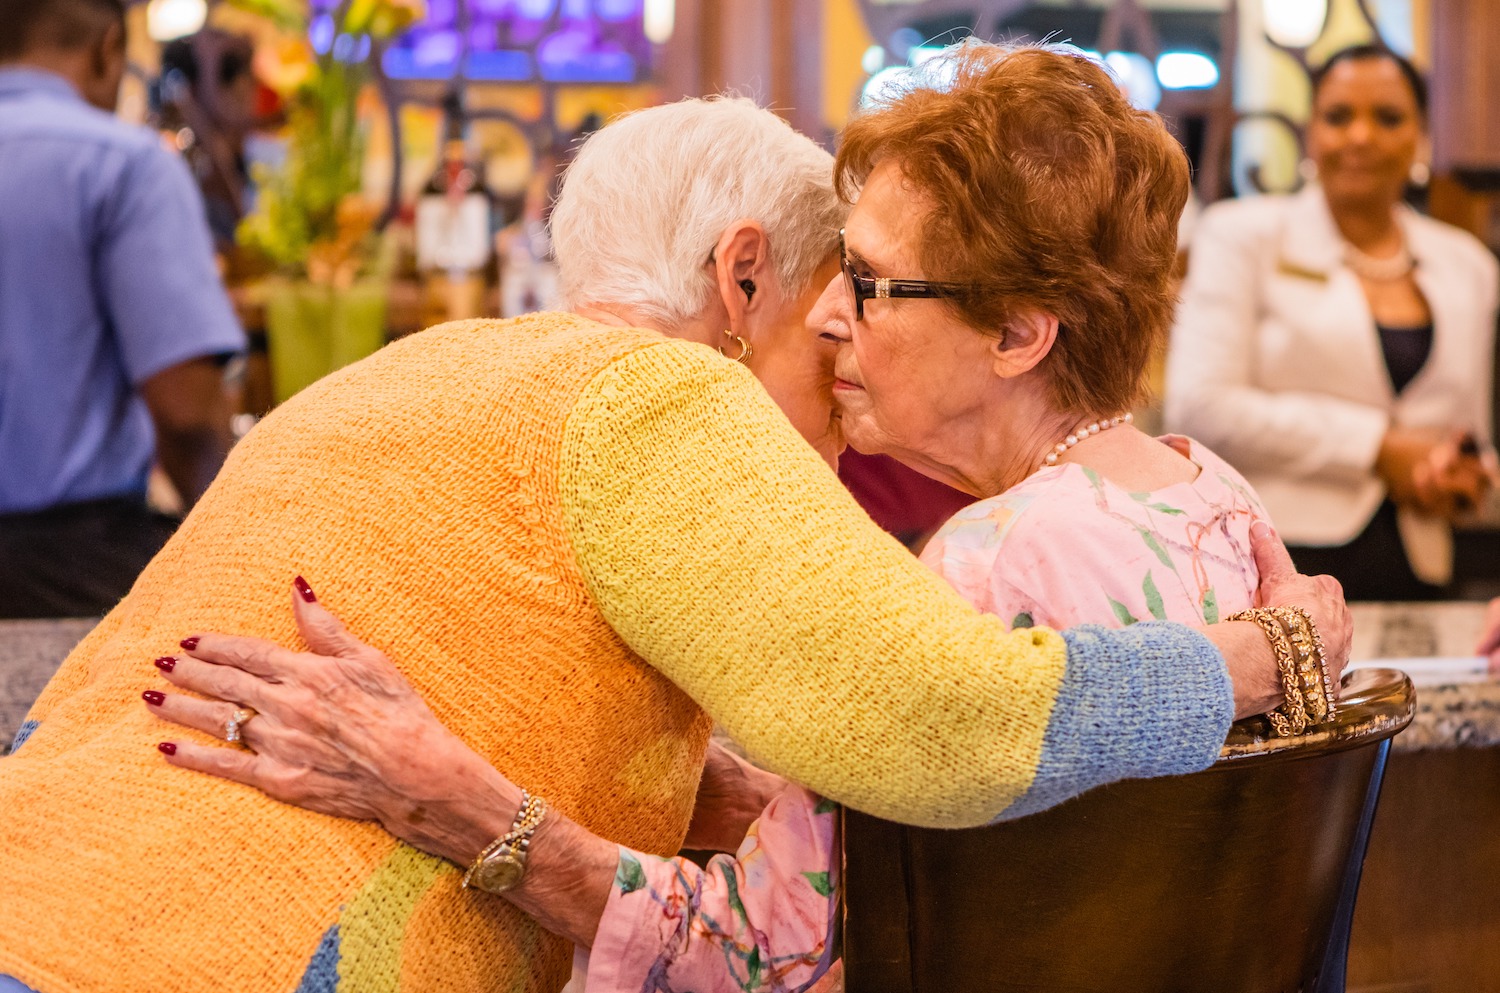 Senior women hugging at a party